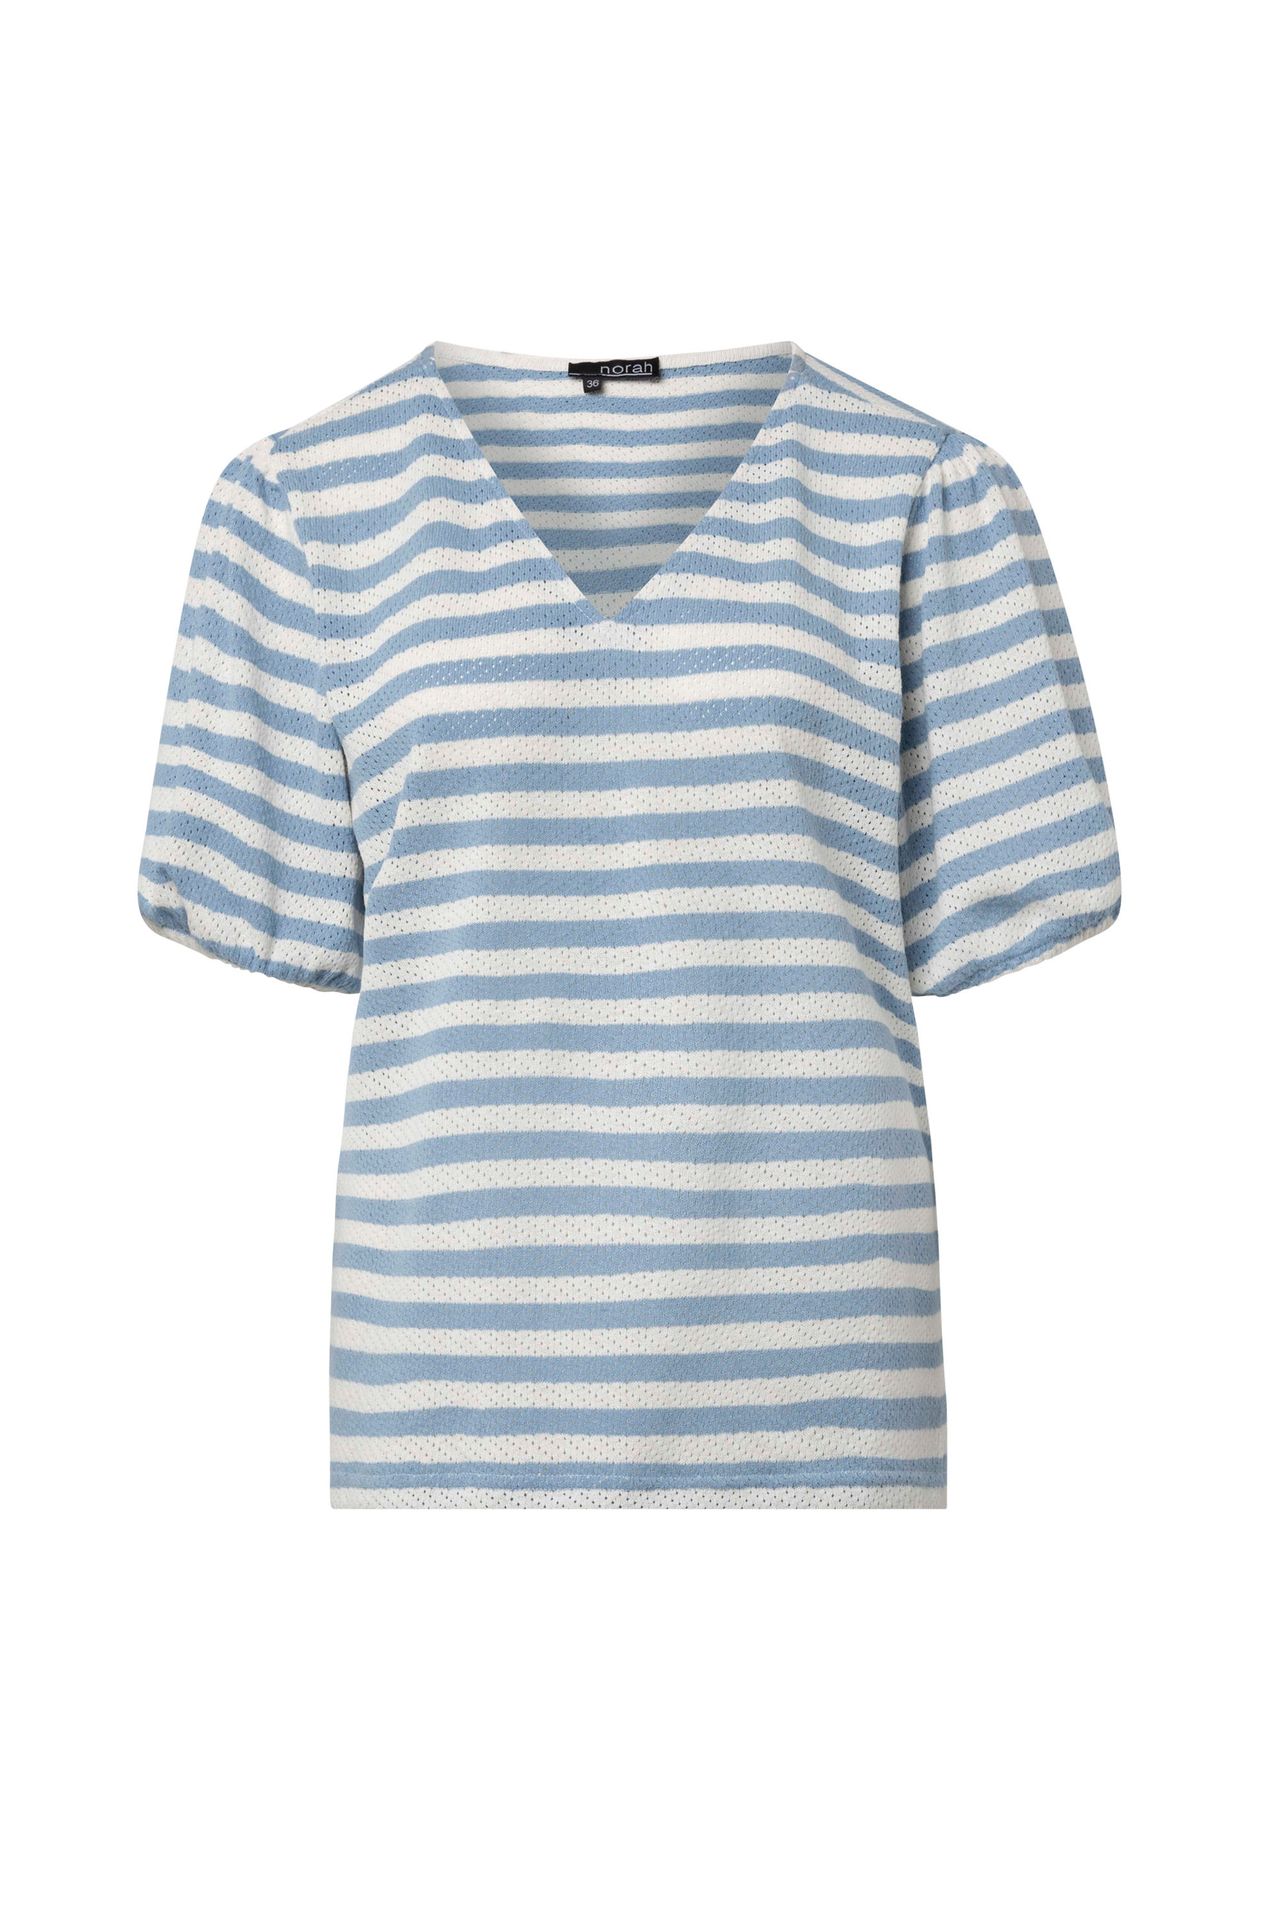  Blauw gestreept shirt blue/white 214806-431-42